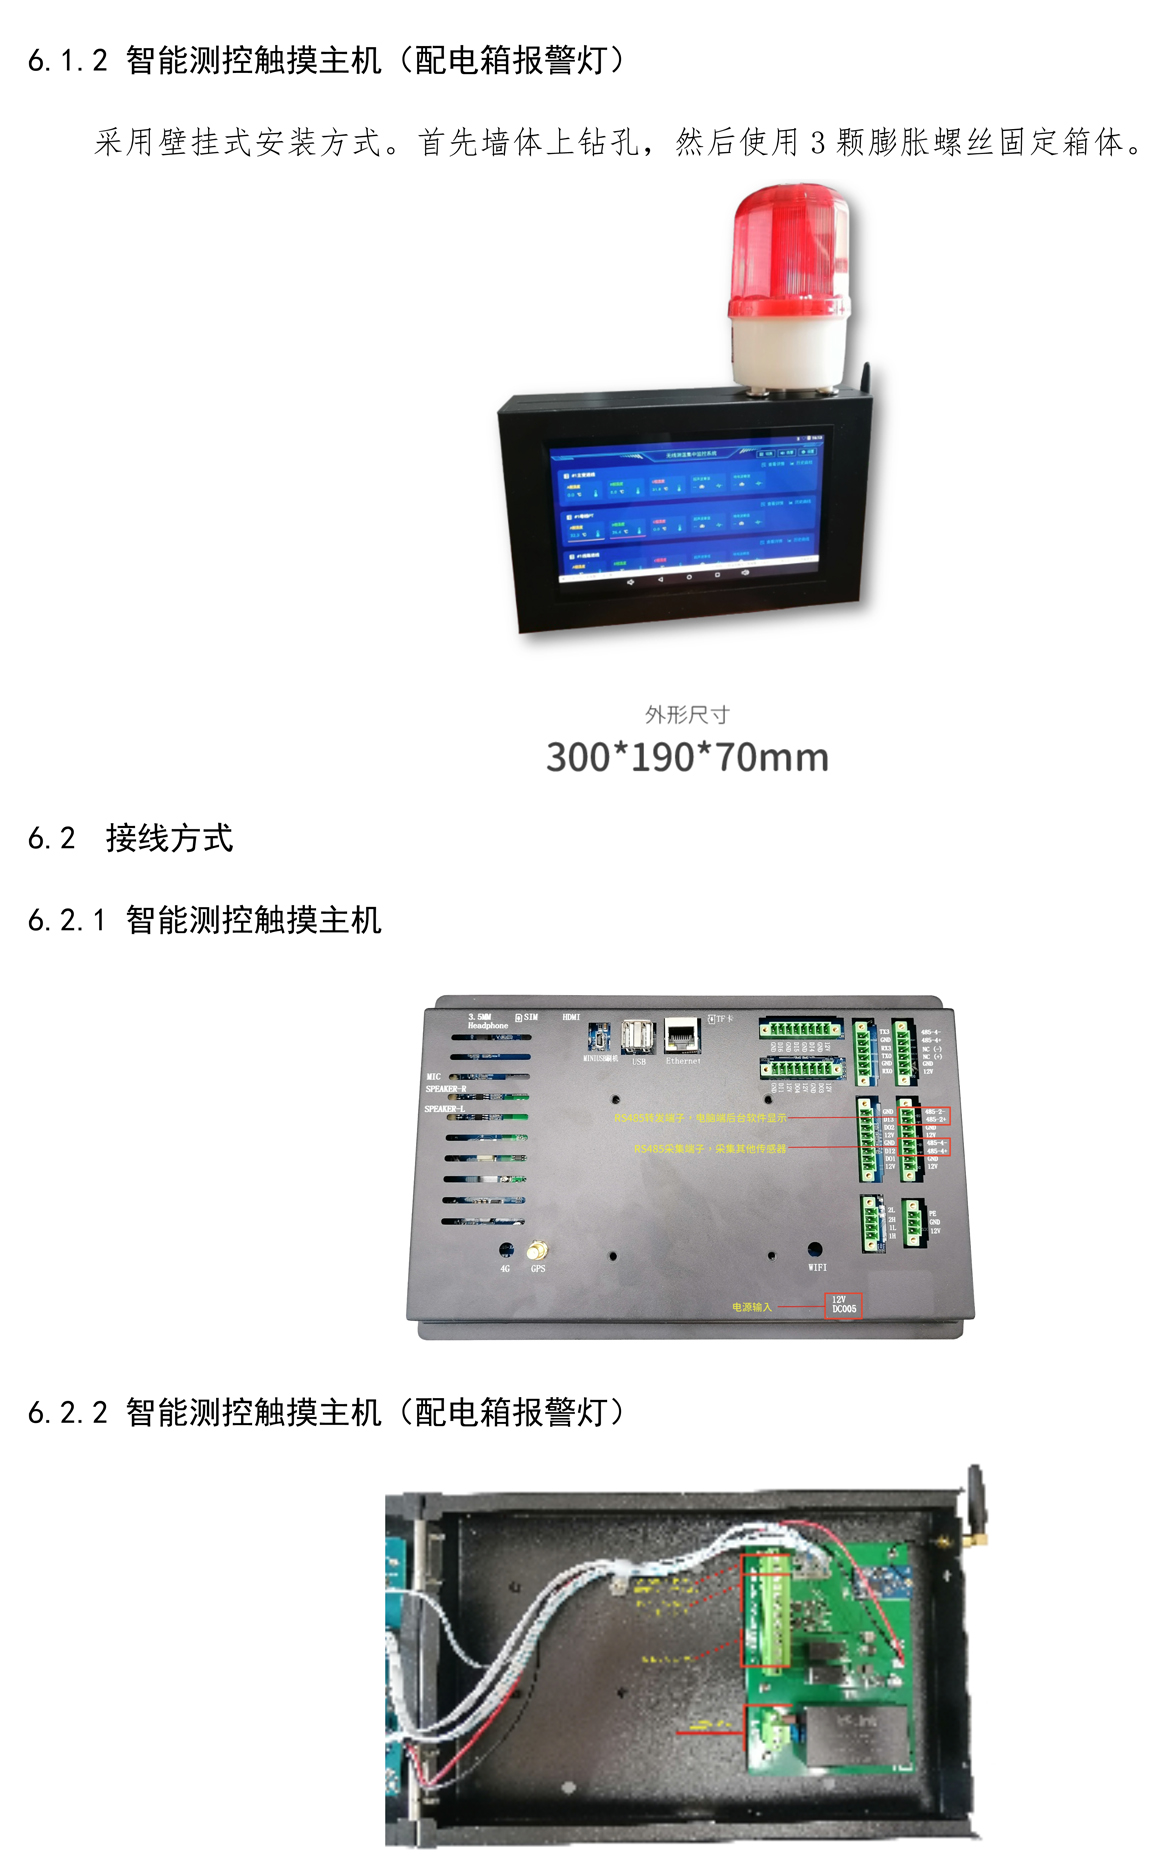 YQK-1500智能测控触摸主机说明书(1)_16.jpg